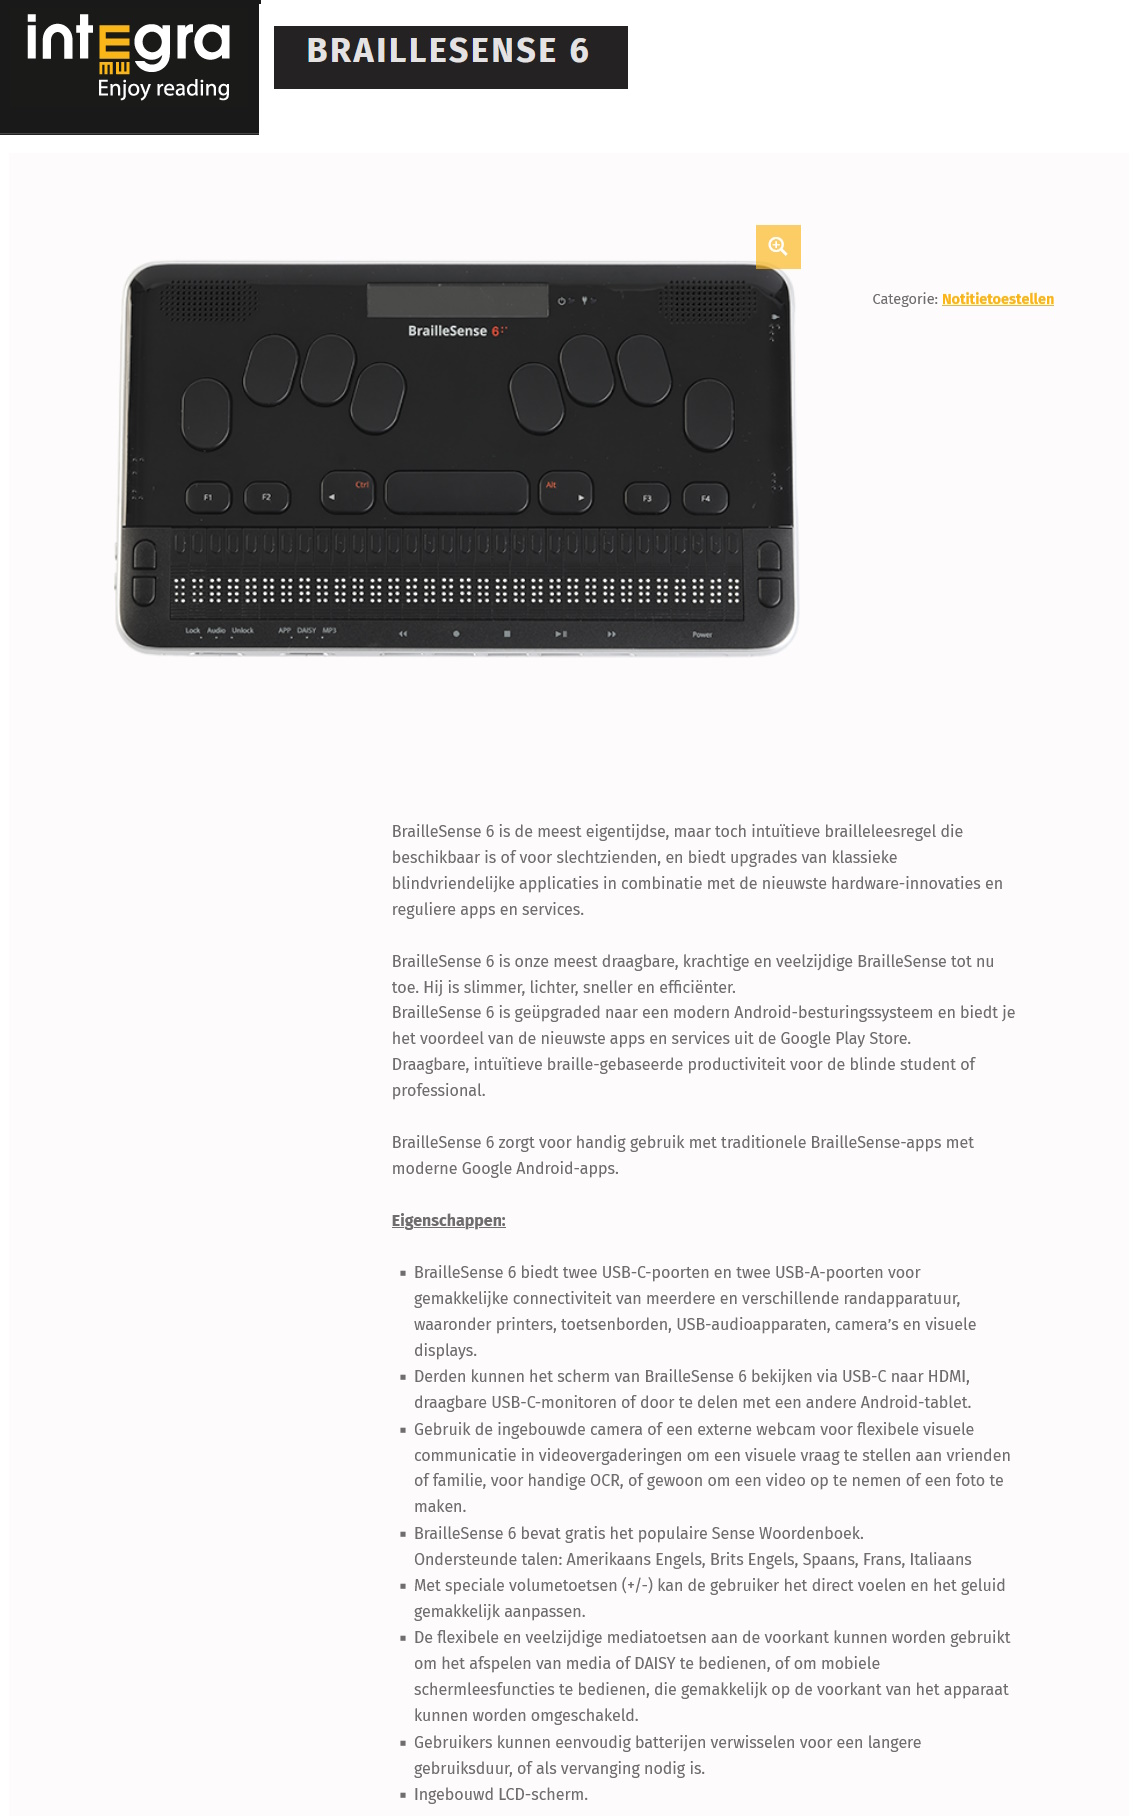 toegevoegd document 2 van BrailleSense 6 (32 cellen)  